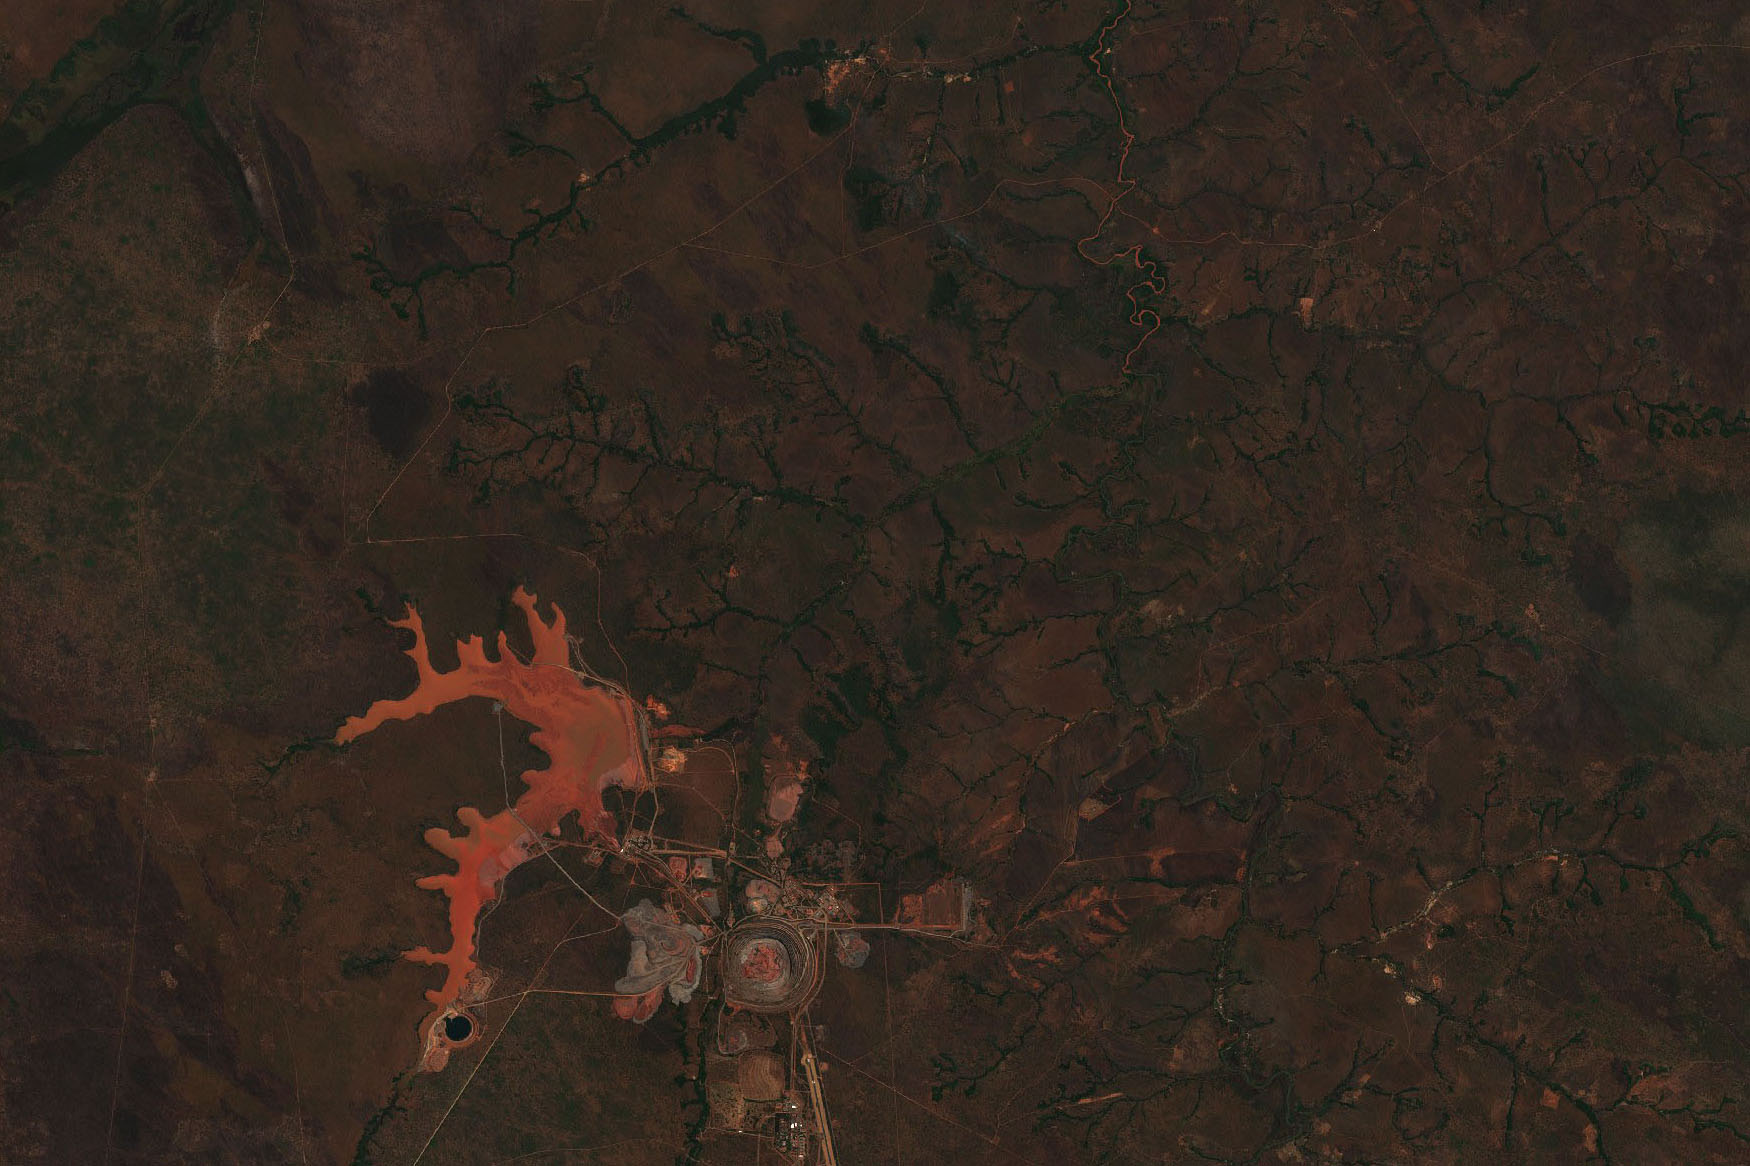 Die Catoca Mine in Angola. | Bild: Copernicus Sentinel data, 30.7.2021, processed by Sentinel Hub